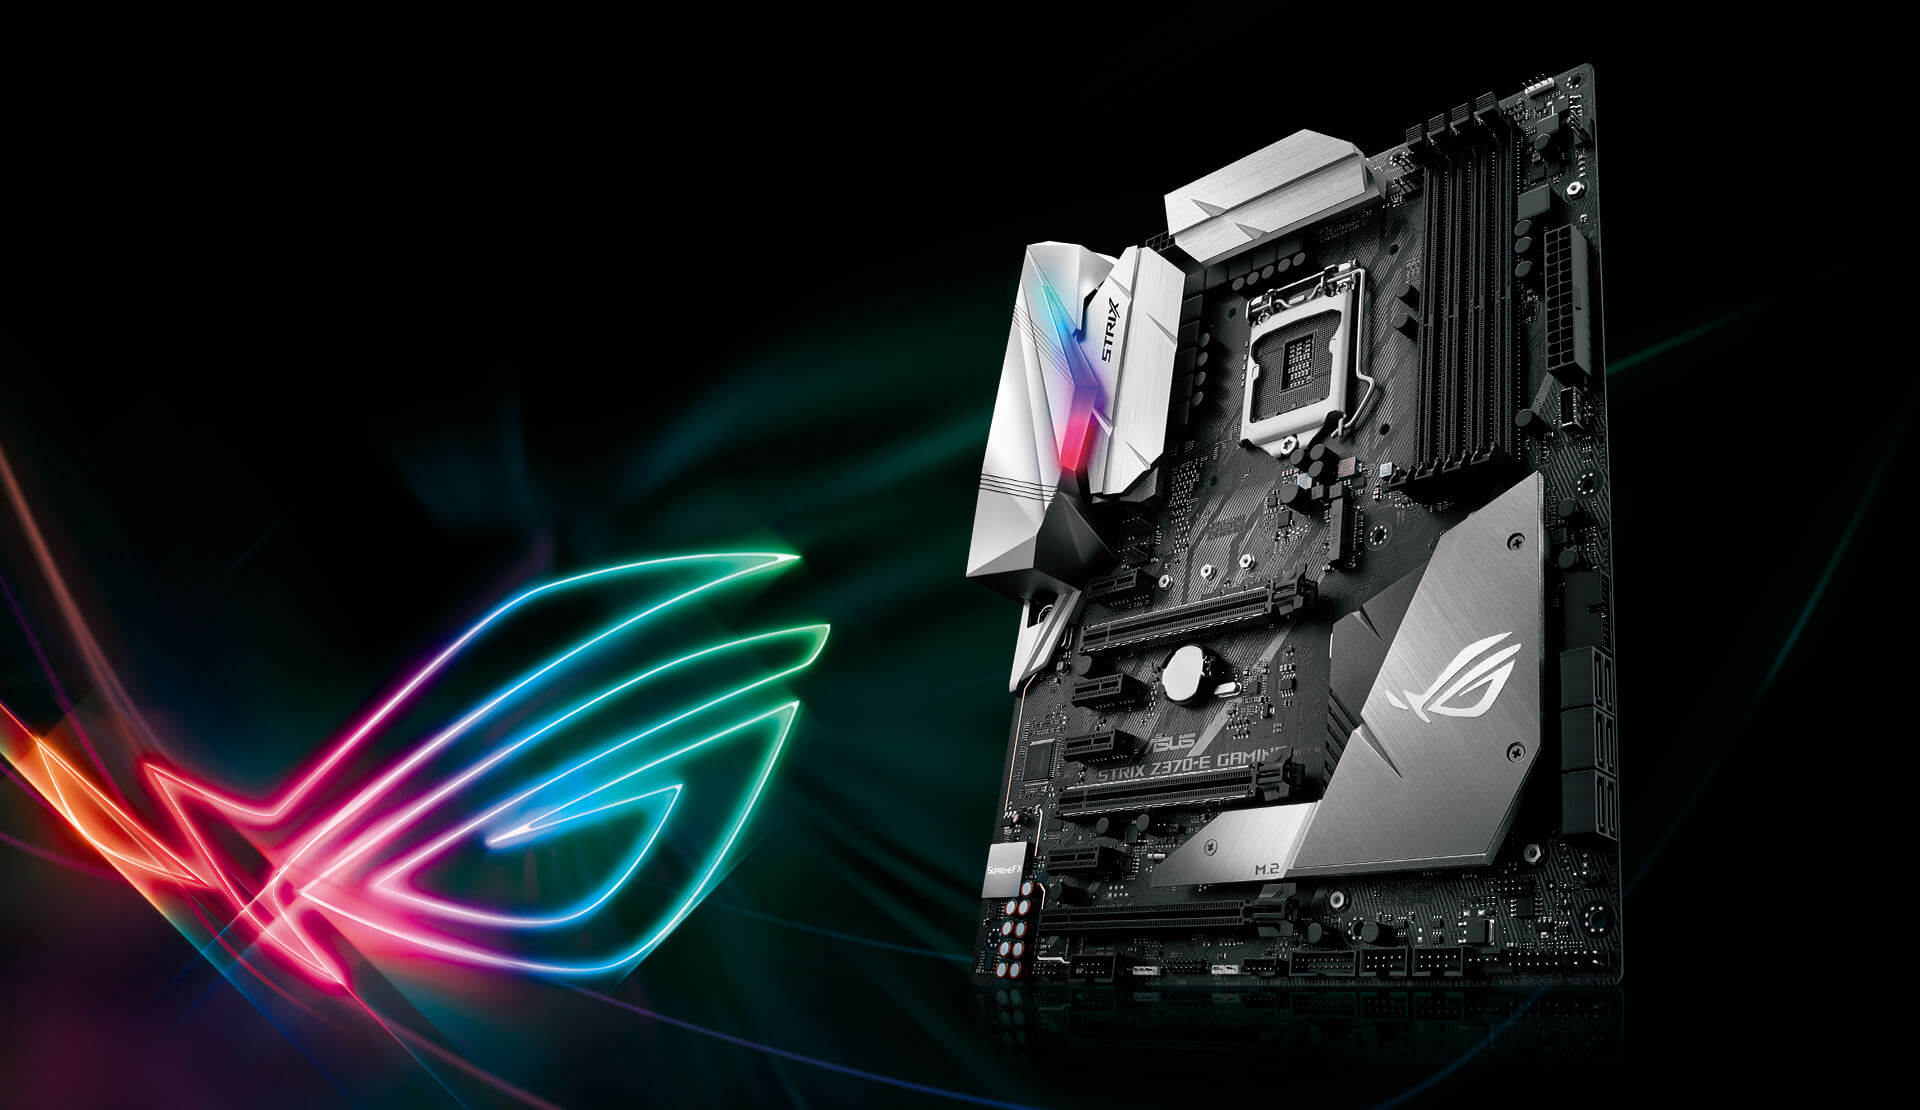 Asus Announces Z370 H370 60 H310 Bios Updates For Intel 9th Gen Cpus Kitguru